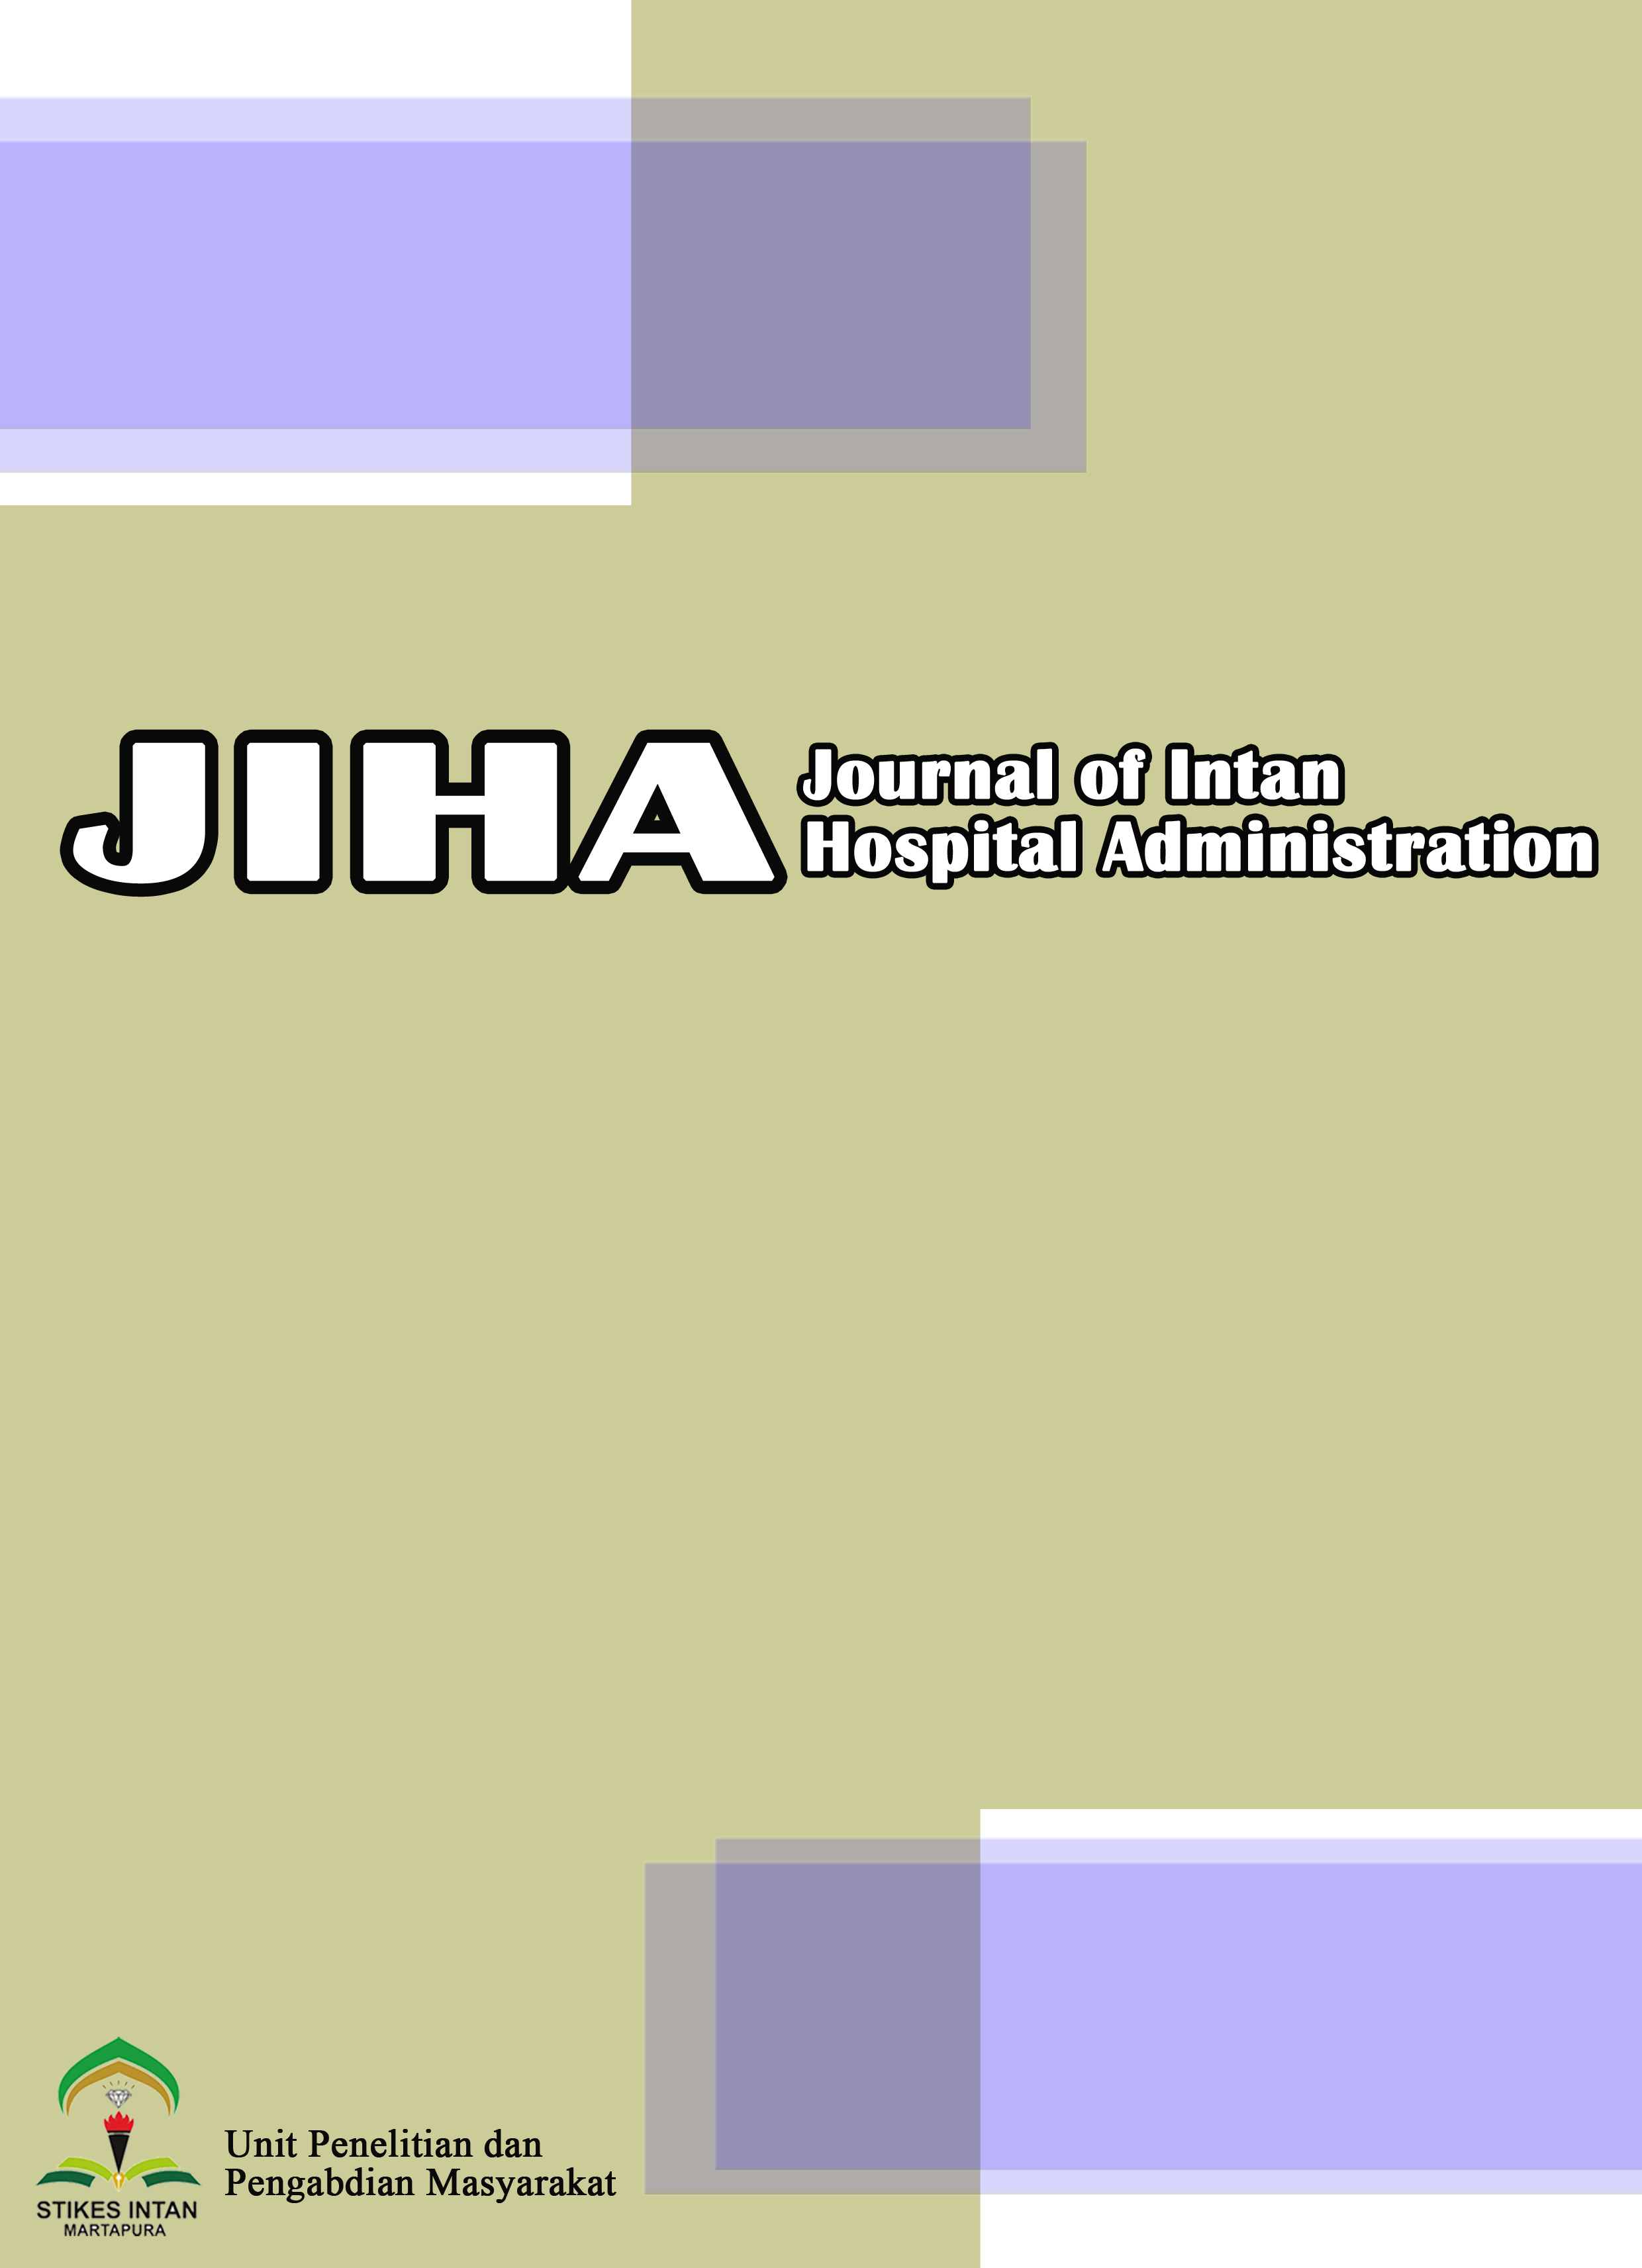 Journal of Intan Hospital Administration (JIHA)